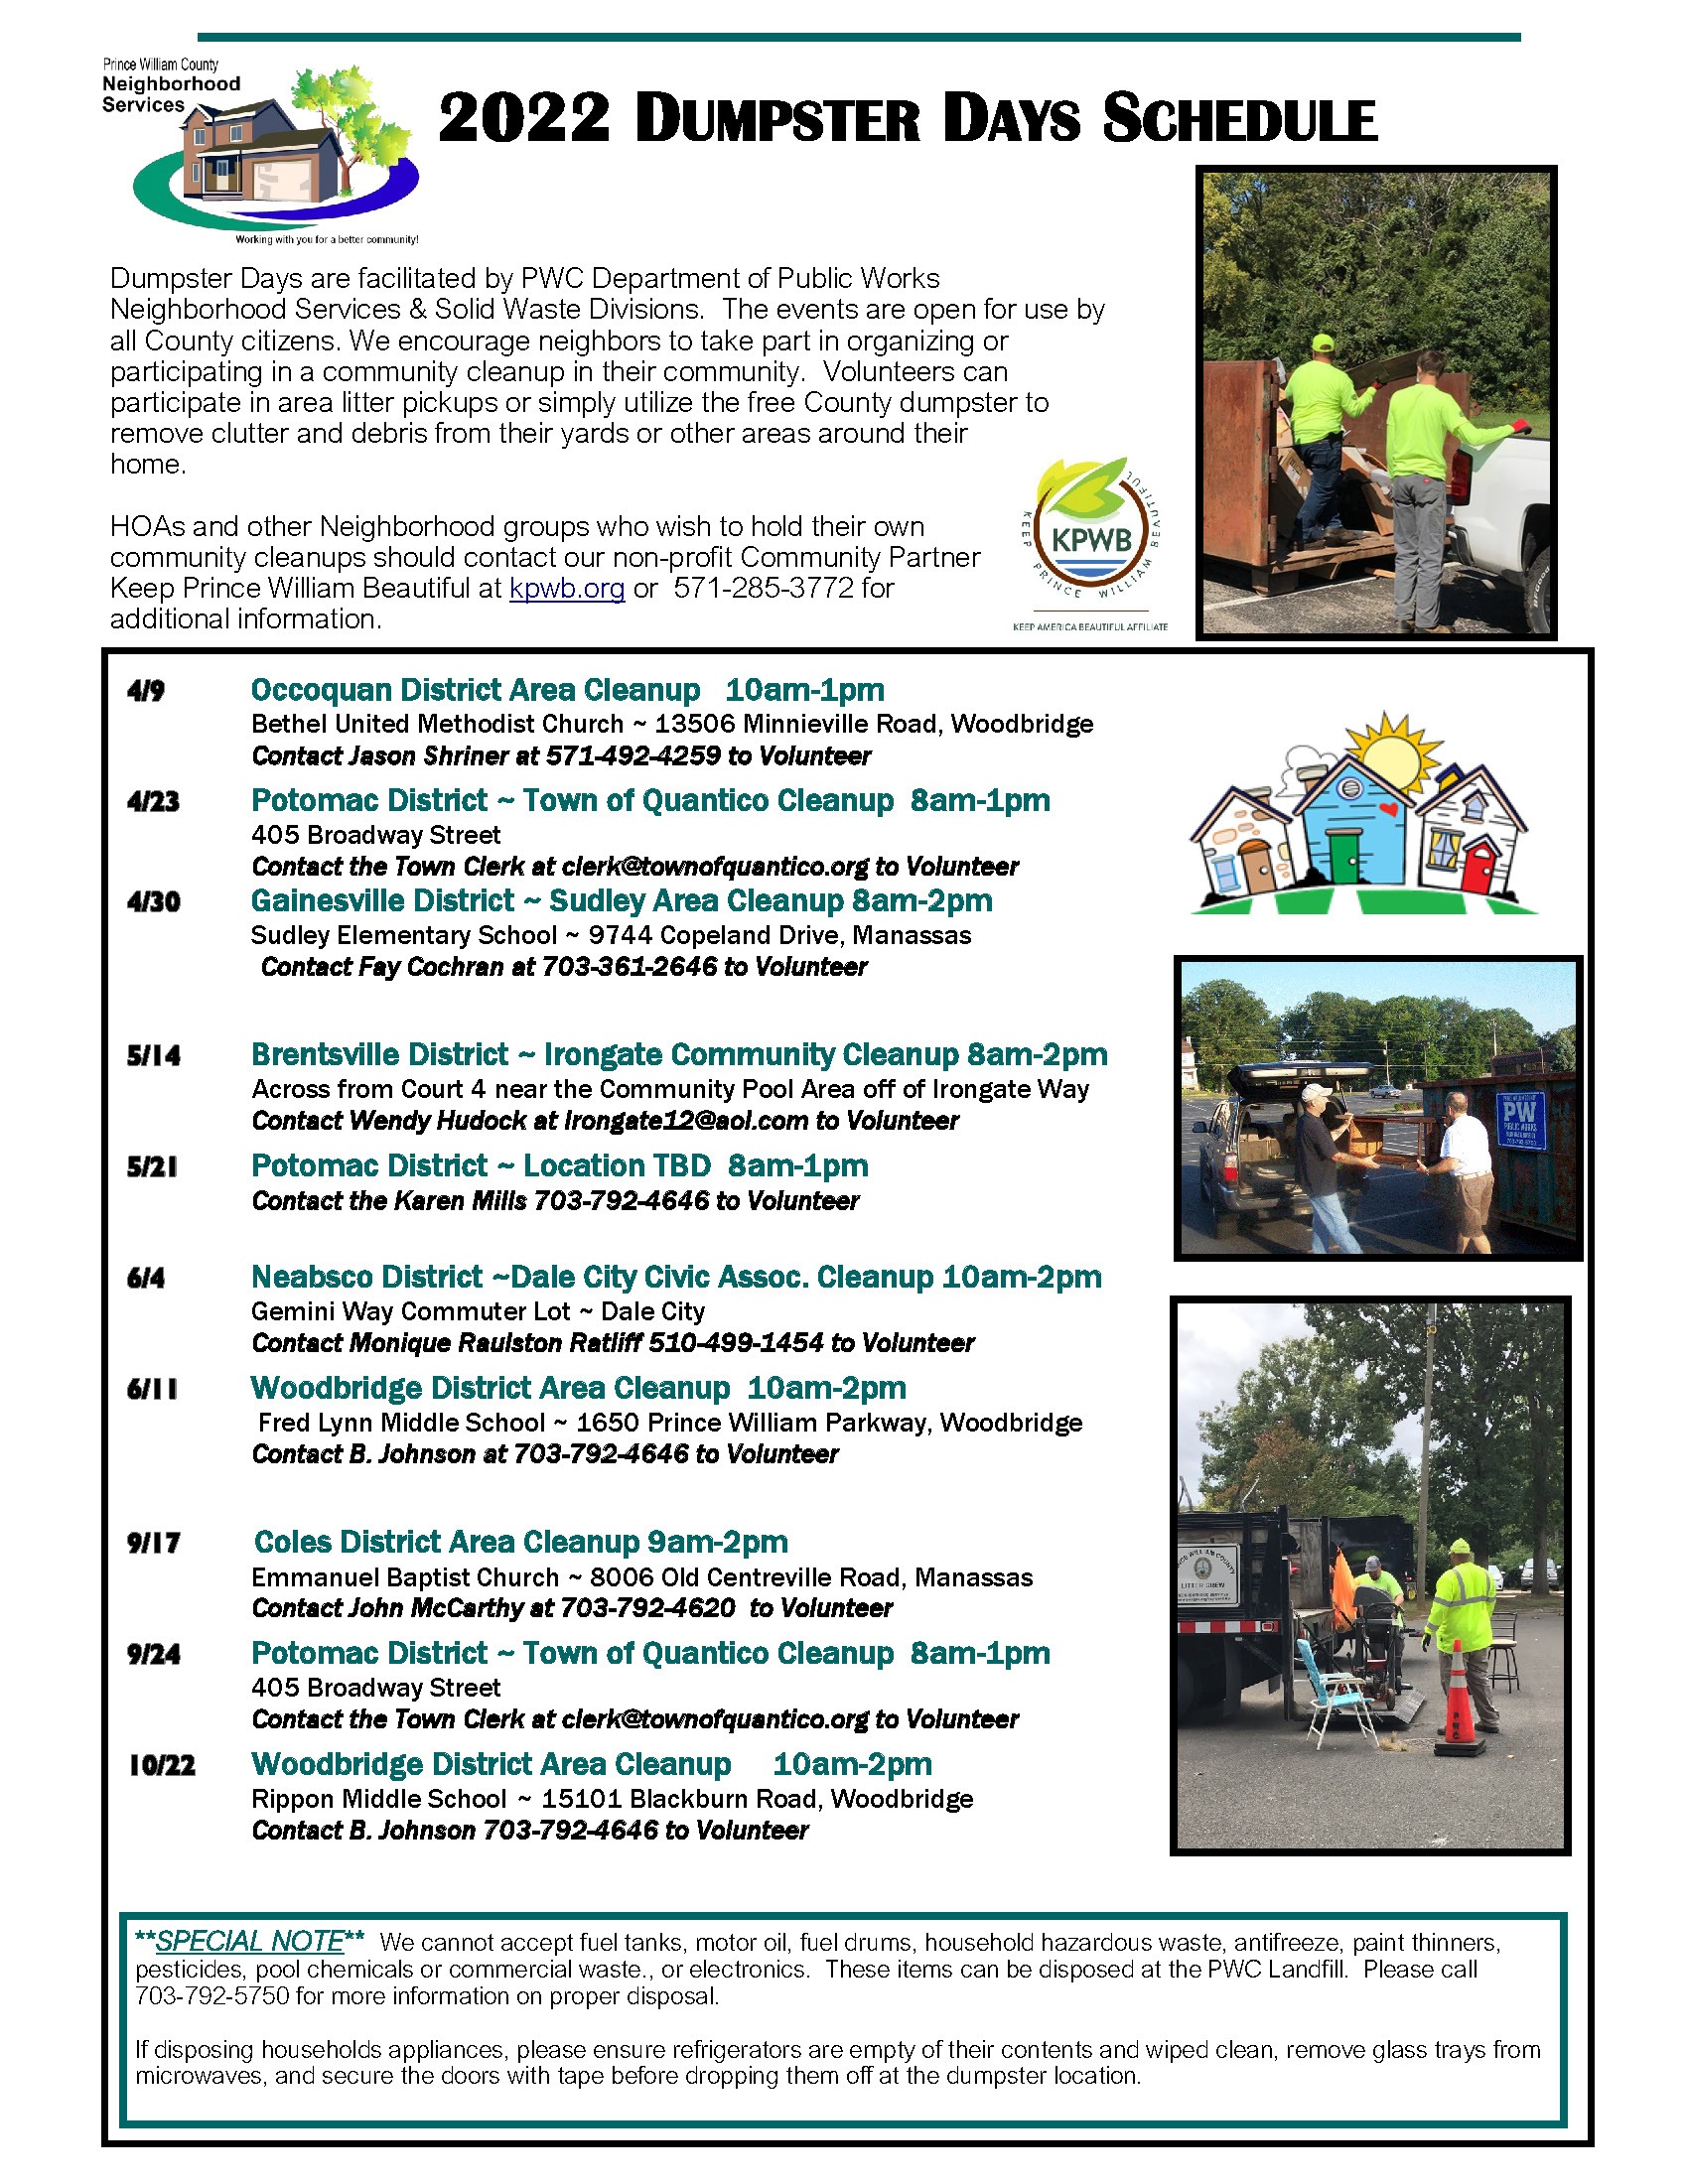 Dumpster Days Schedule 2022 FINAL - 2022 DUMPSTER DAYS: Woodbridge District Area Cleanup